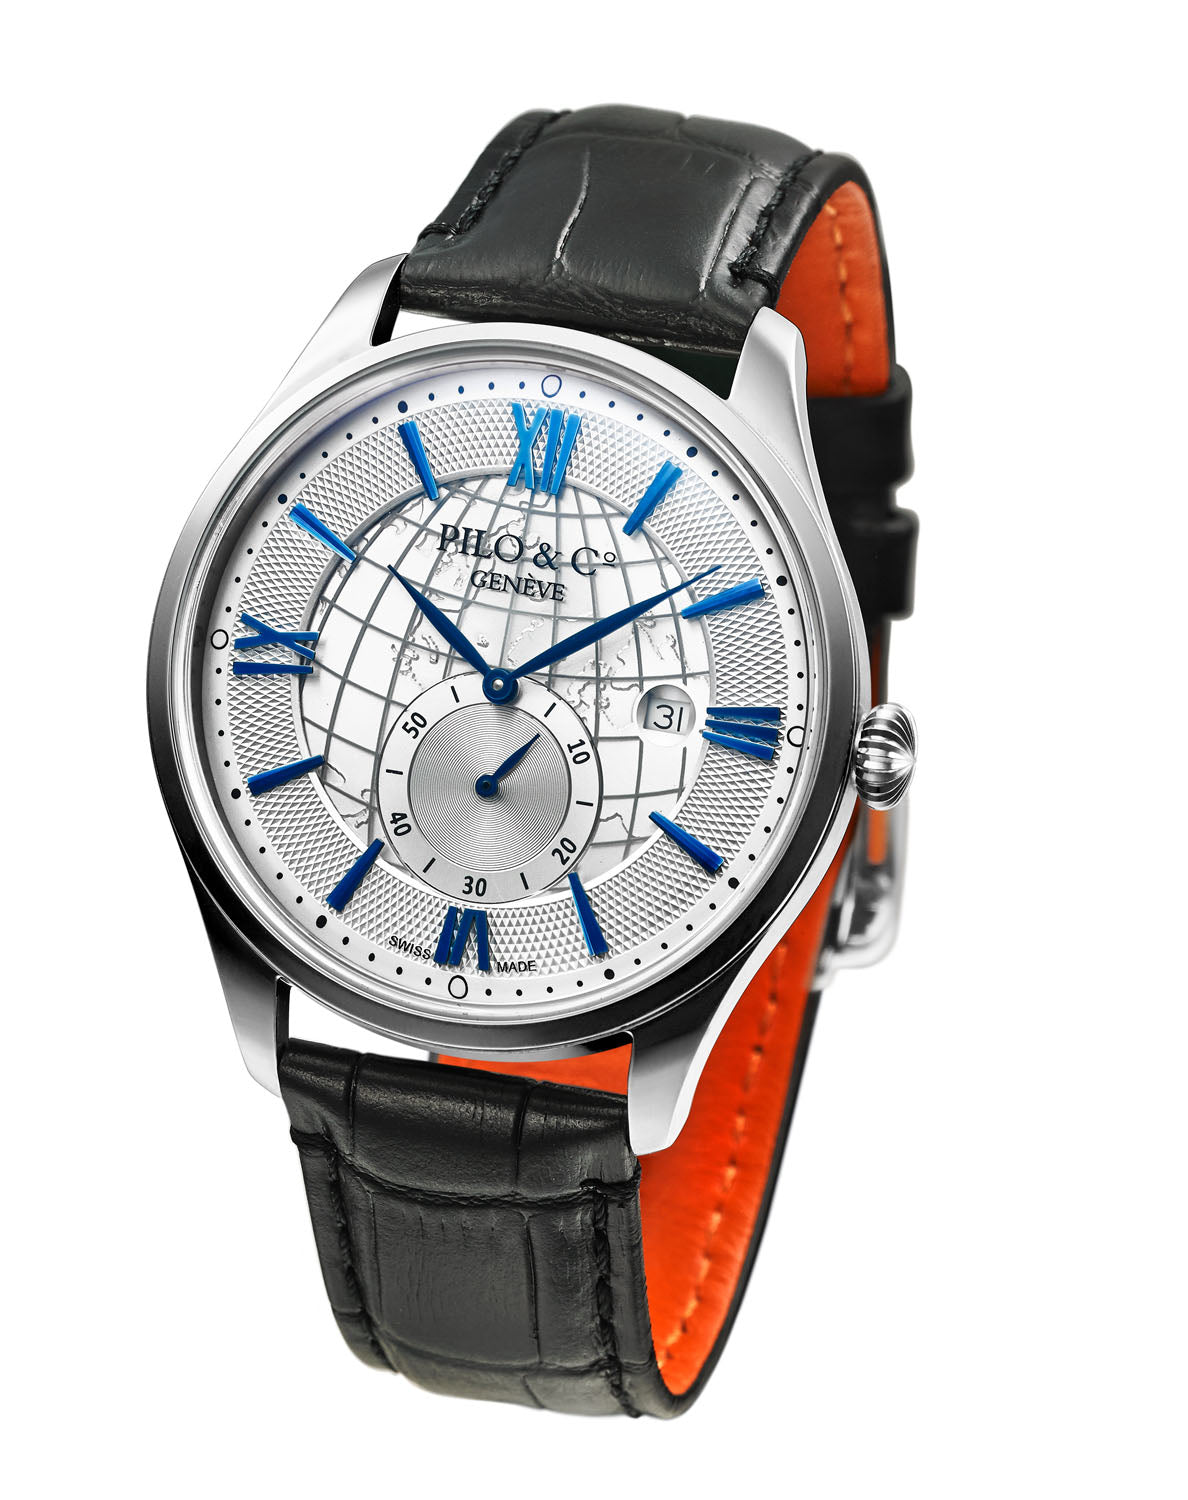 Pilo & Co Geneva Swiss Quartz Montecristo Men's Watch collection Silver